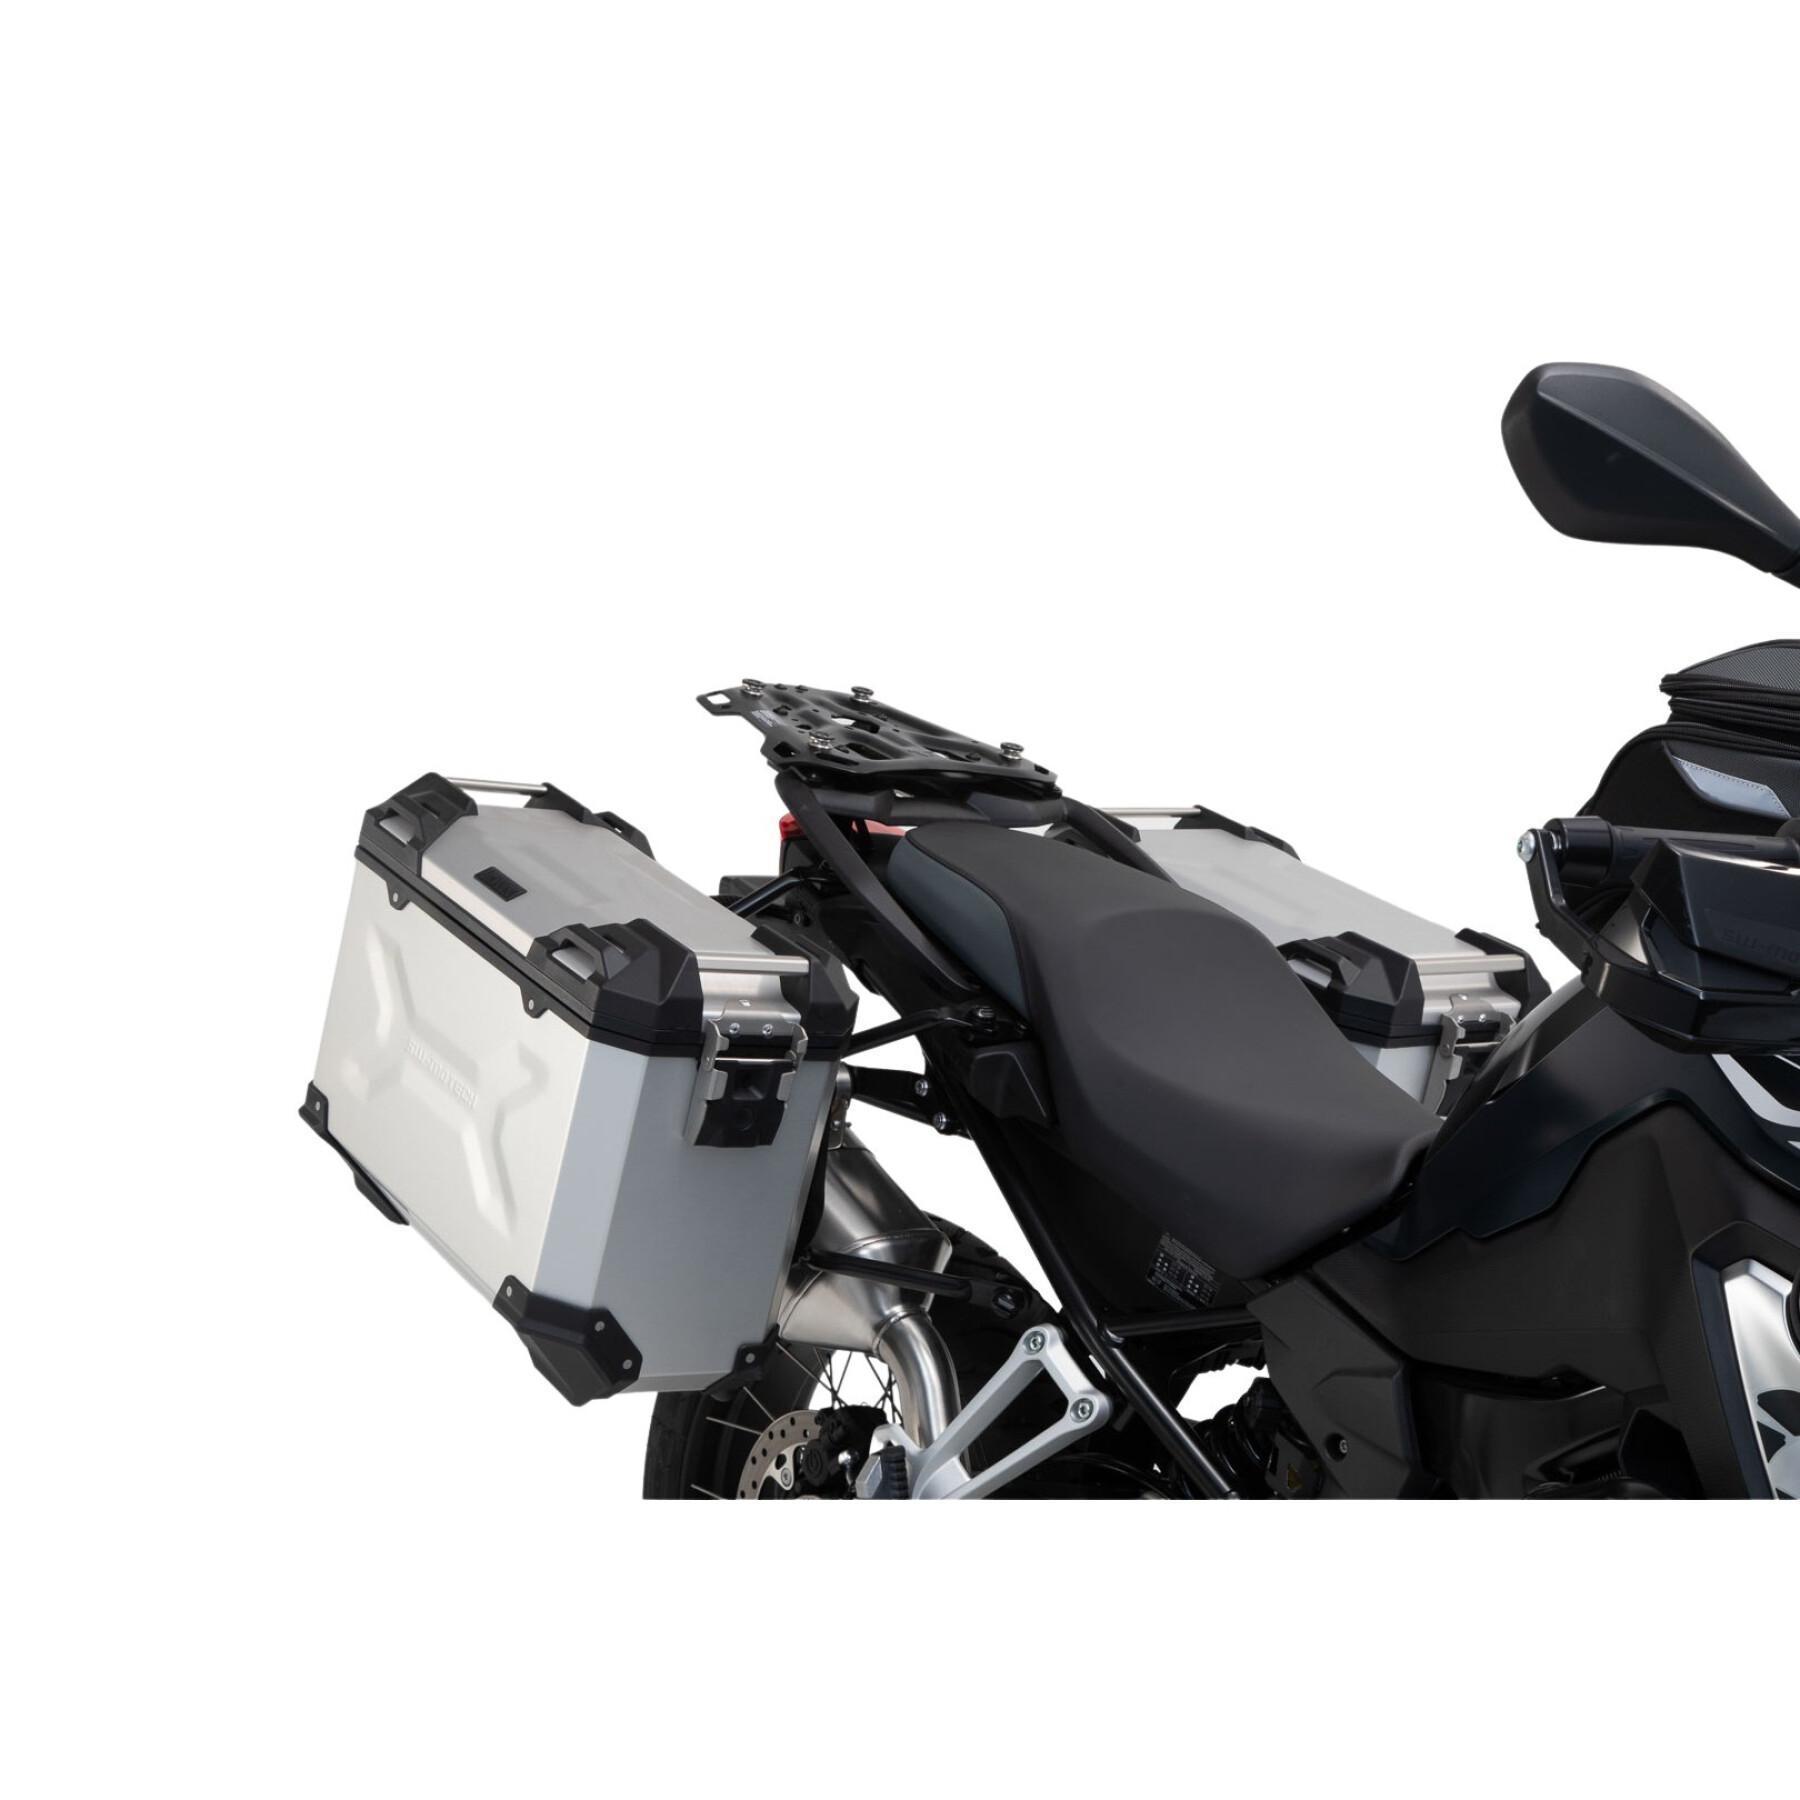 Support valises latérales moto Sw-Motech Pro. Bmw F 750 Gs, F 850 Gs/Adv (18-)